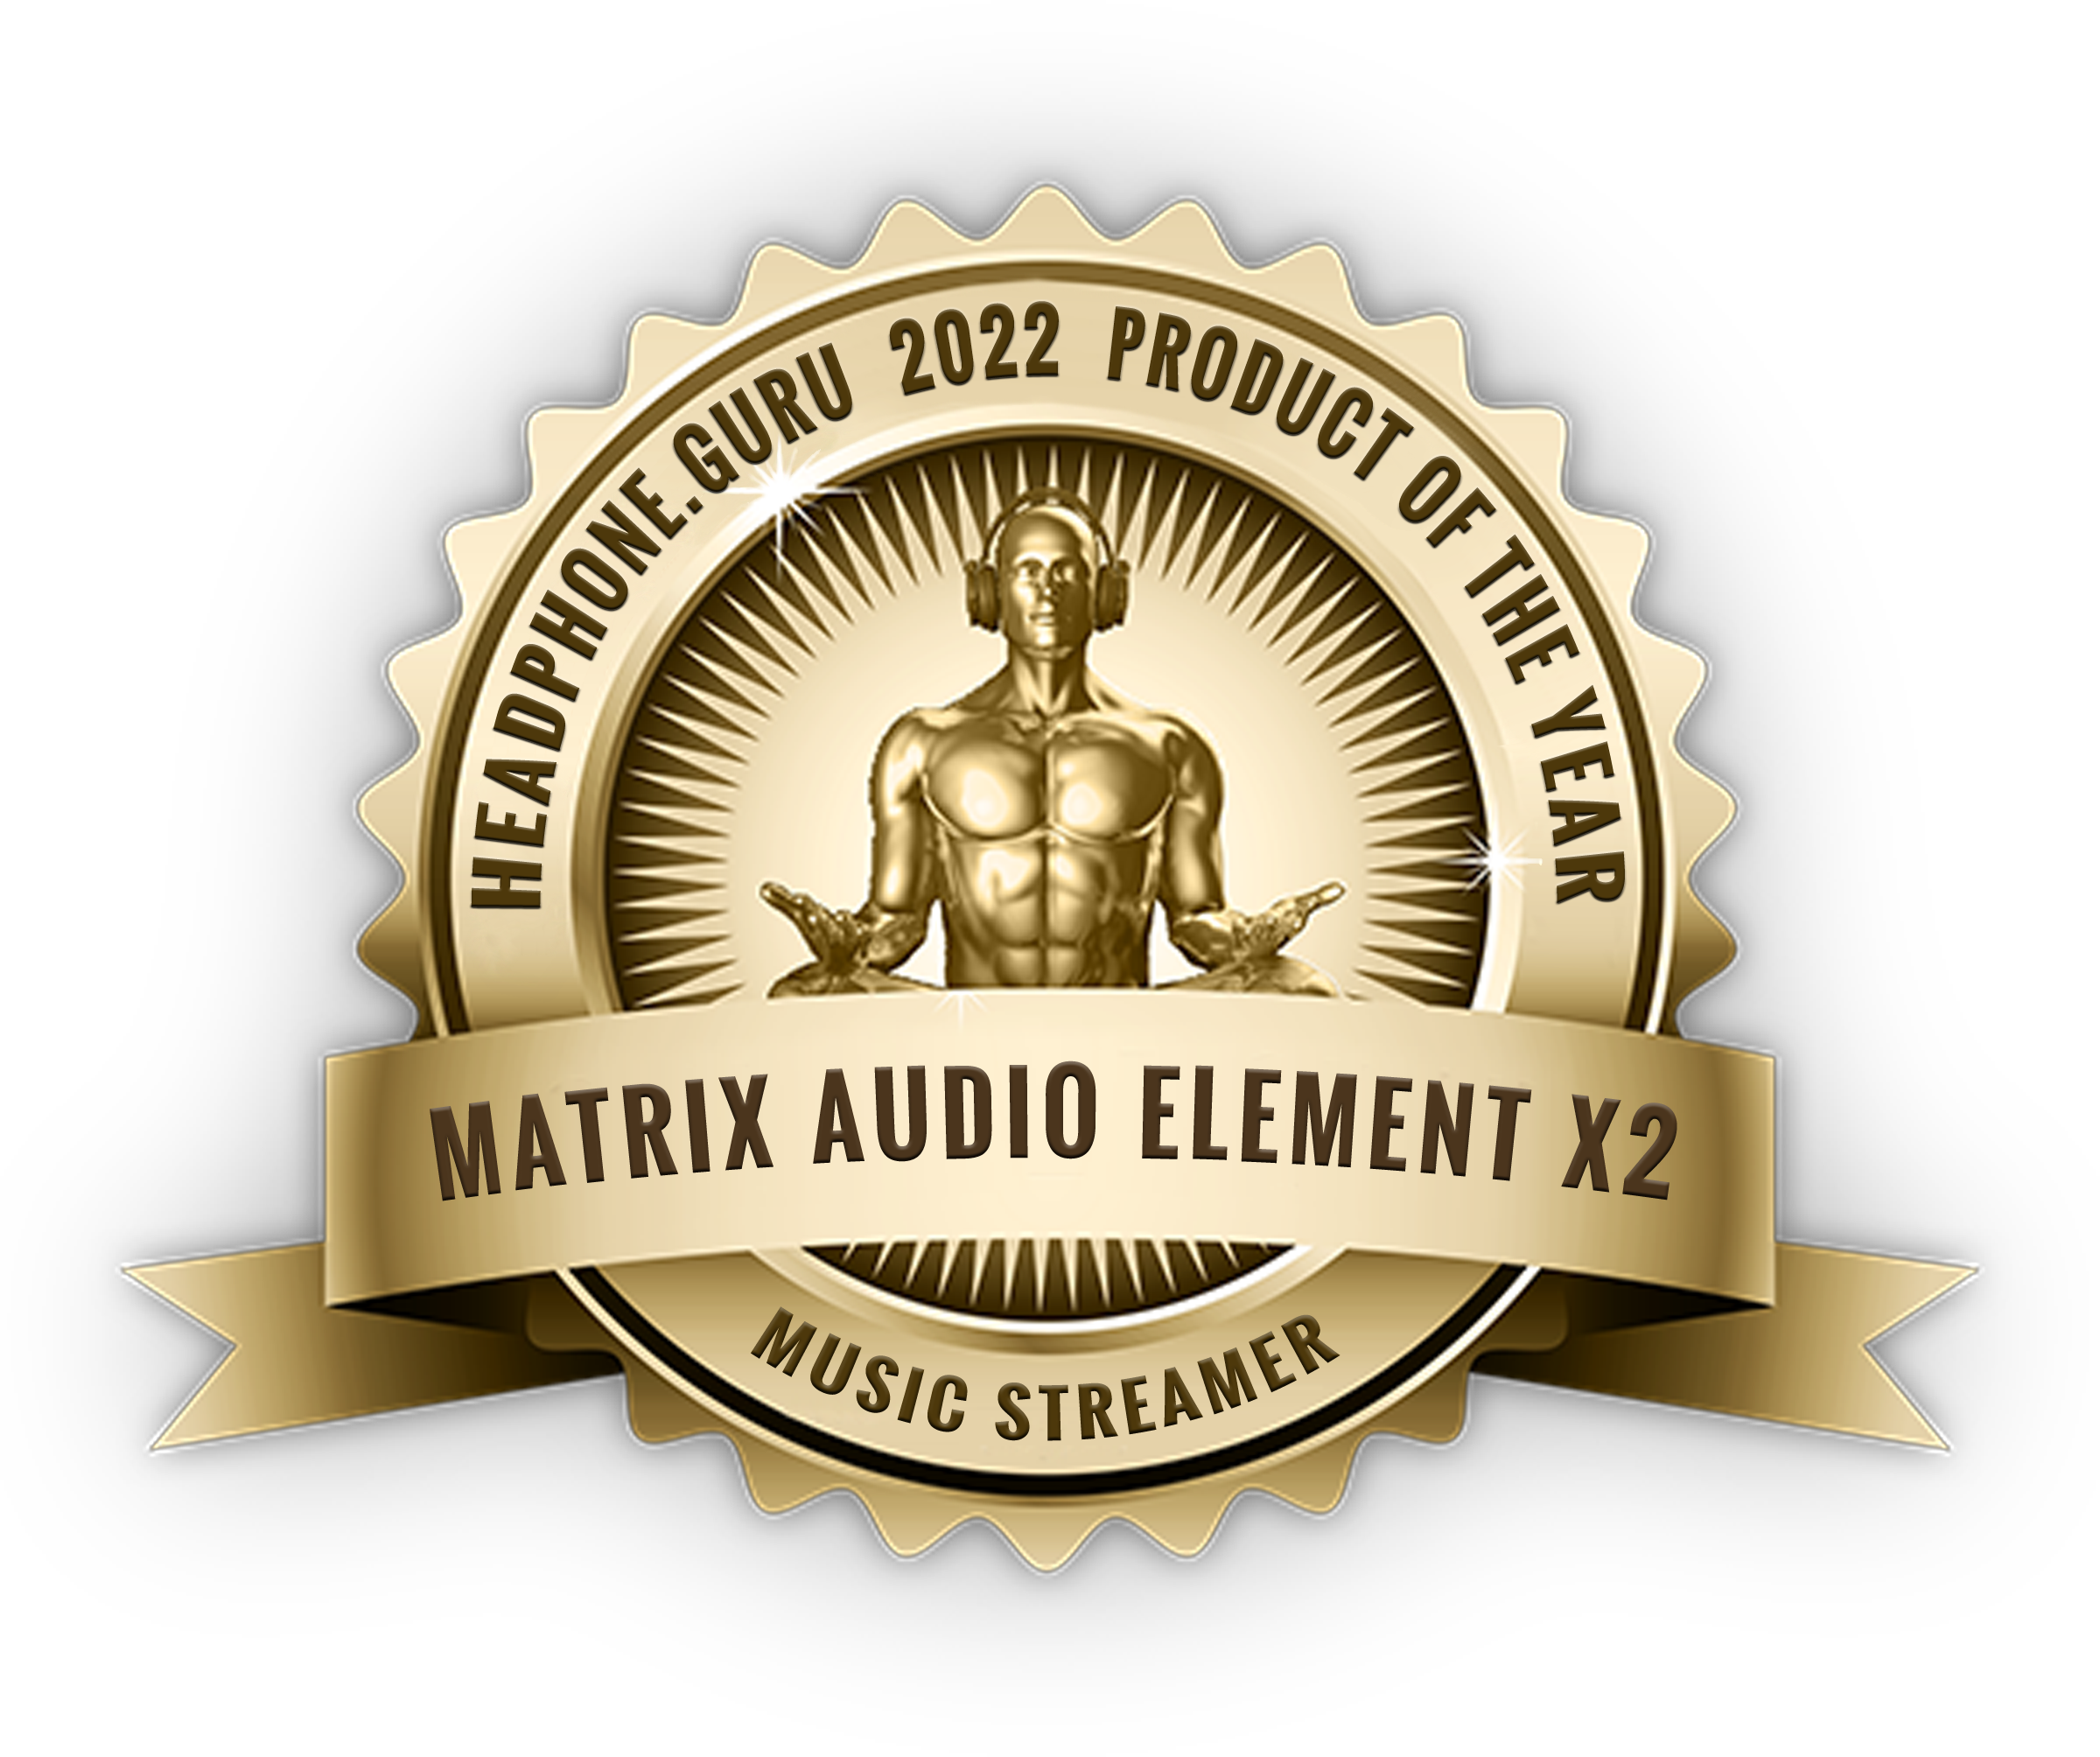 2022 Music Streamer of the Year - MATRIX AUDIO ELEMENT X2